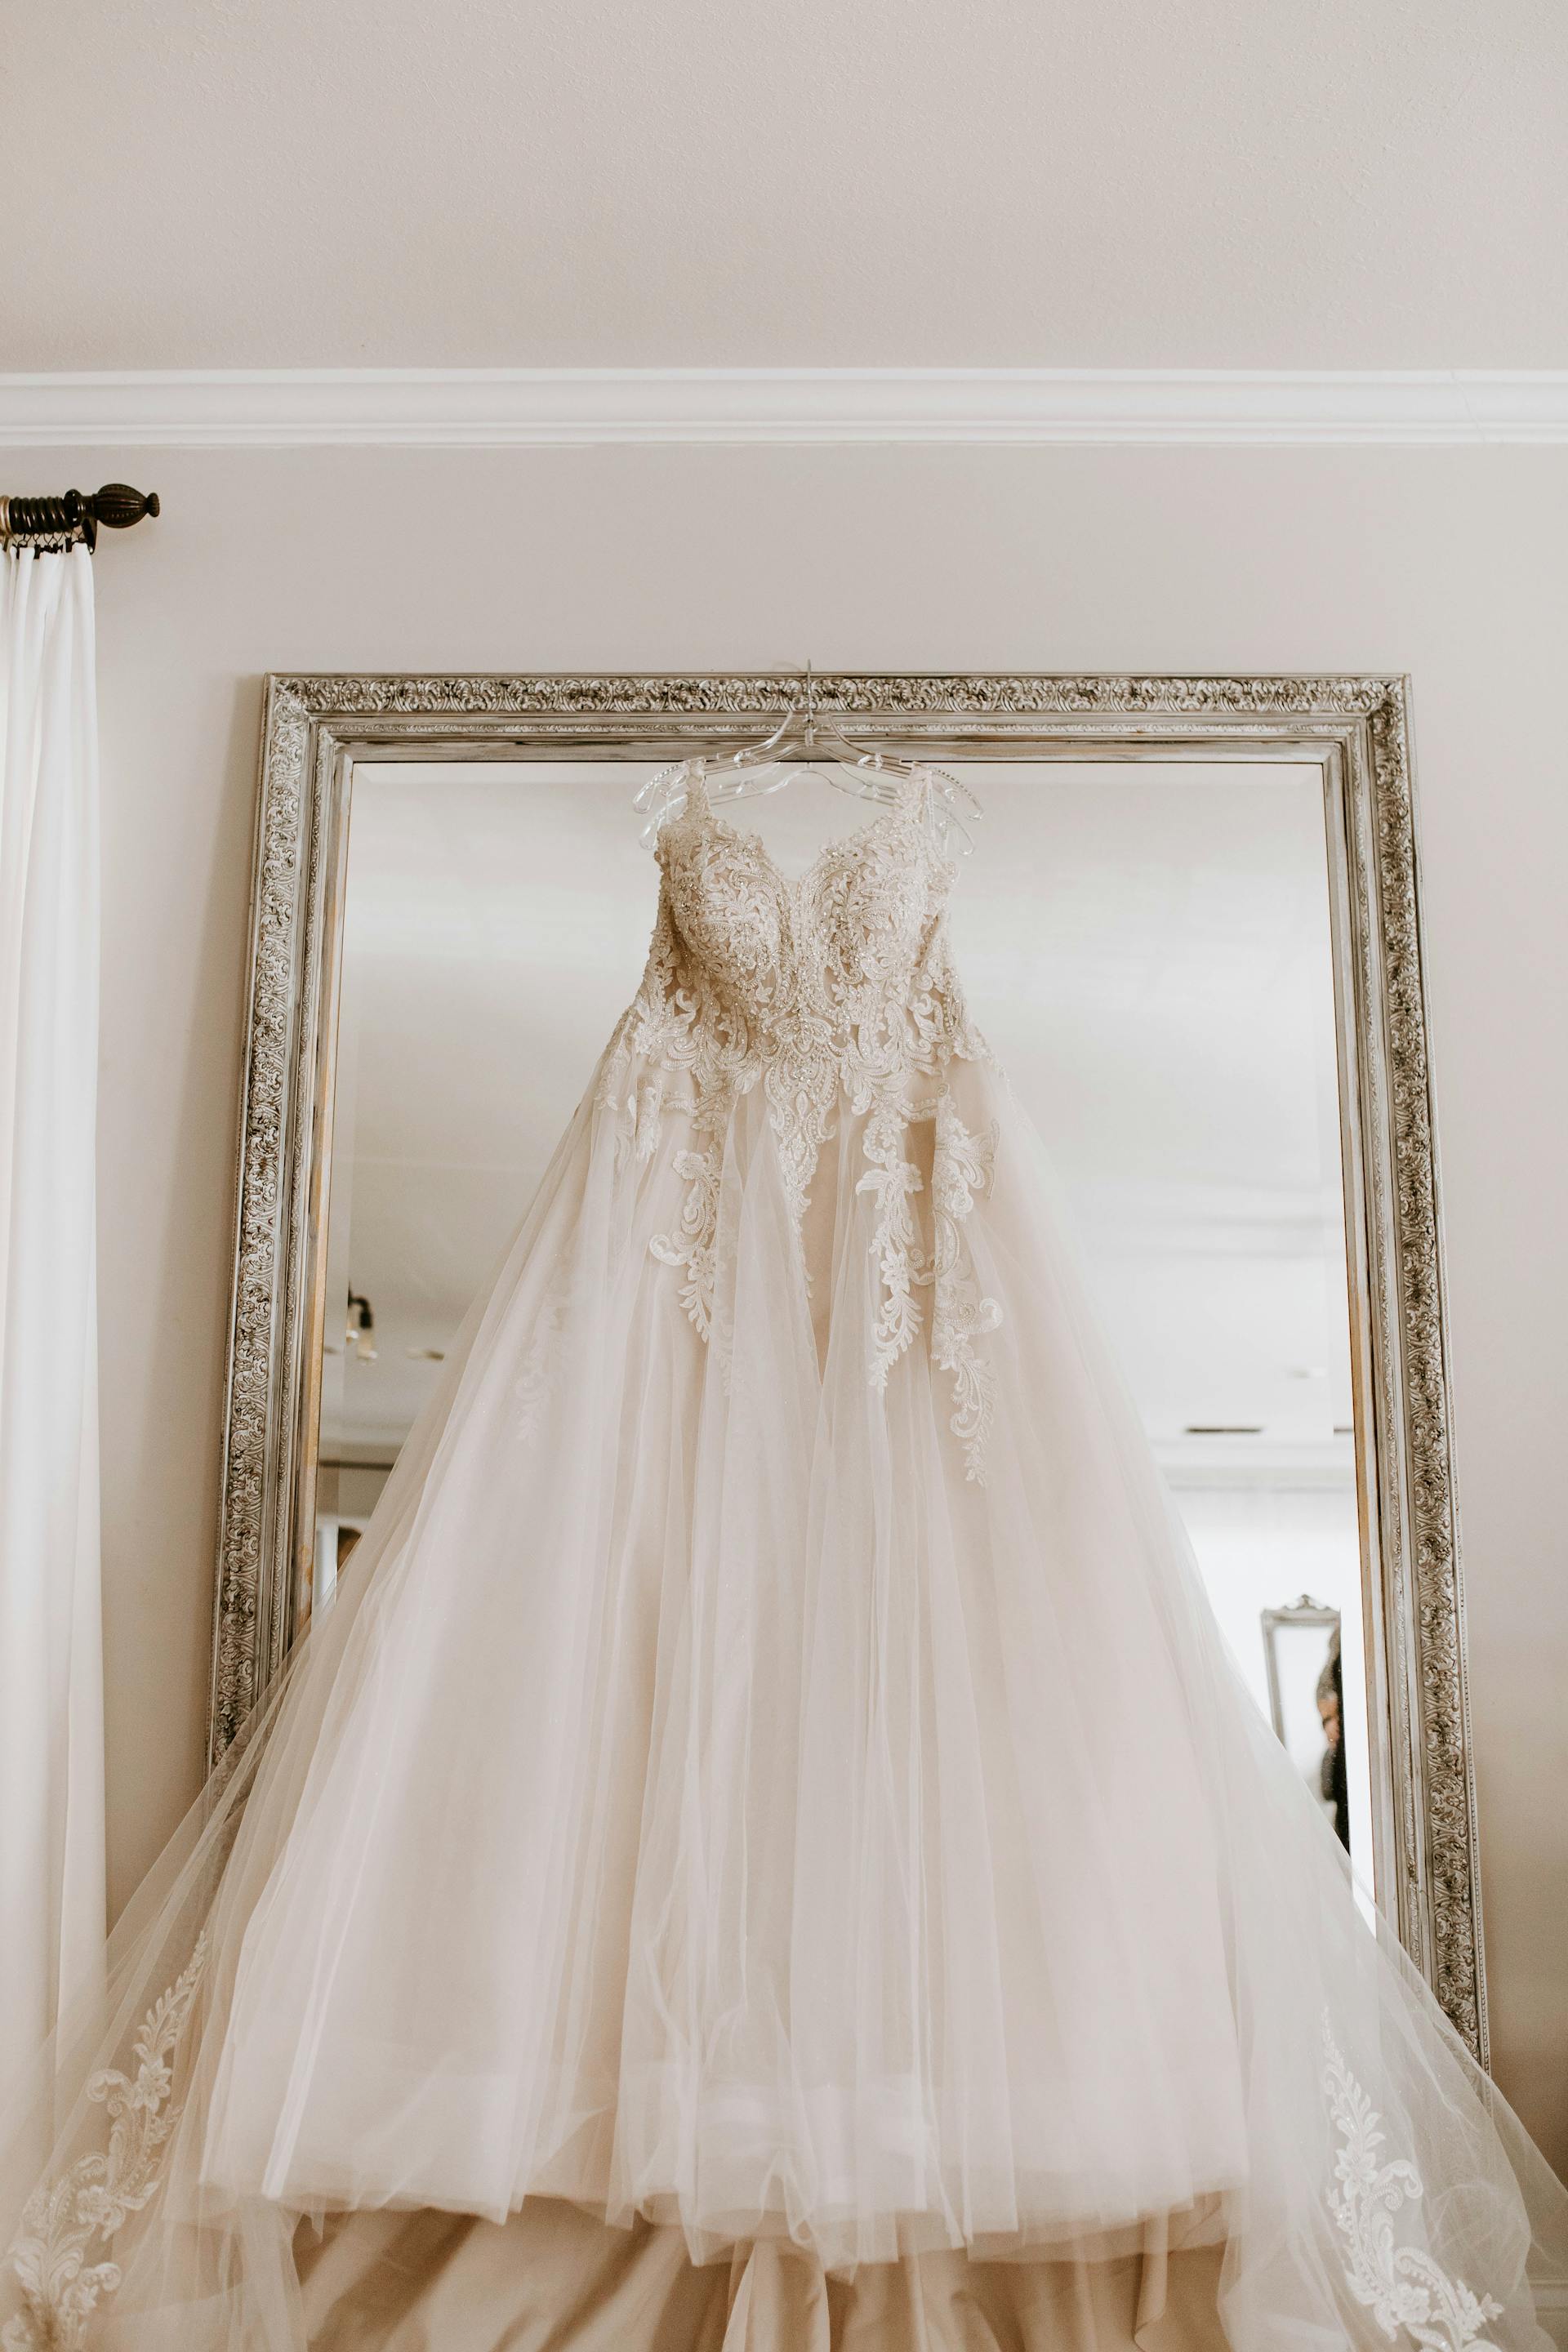 Vestido de novia | Foto: Pexels